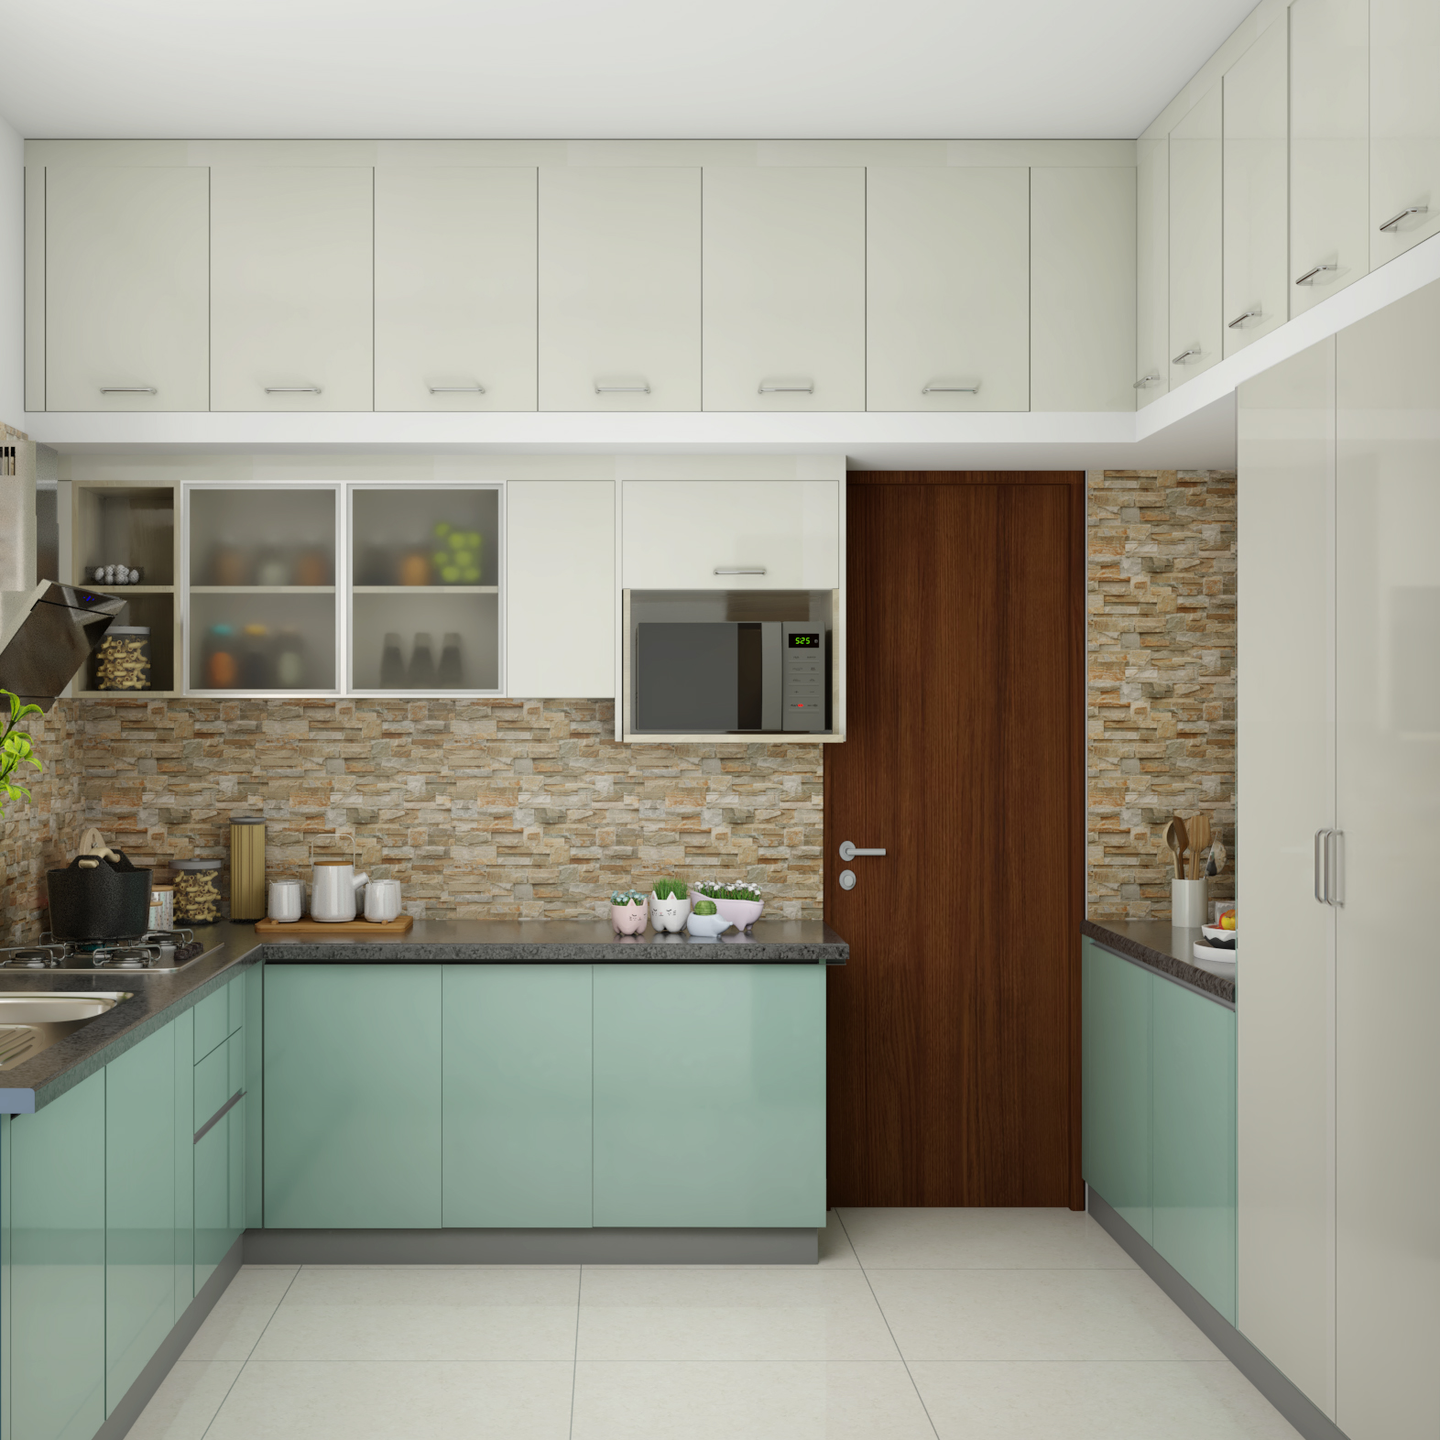 Spacious Kitchen Design For Rental Homes - Livspace